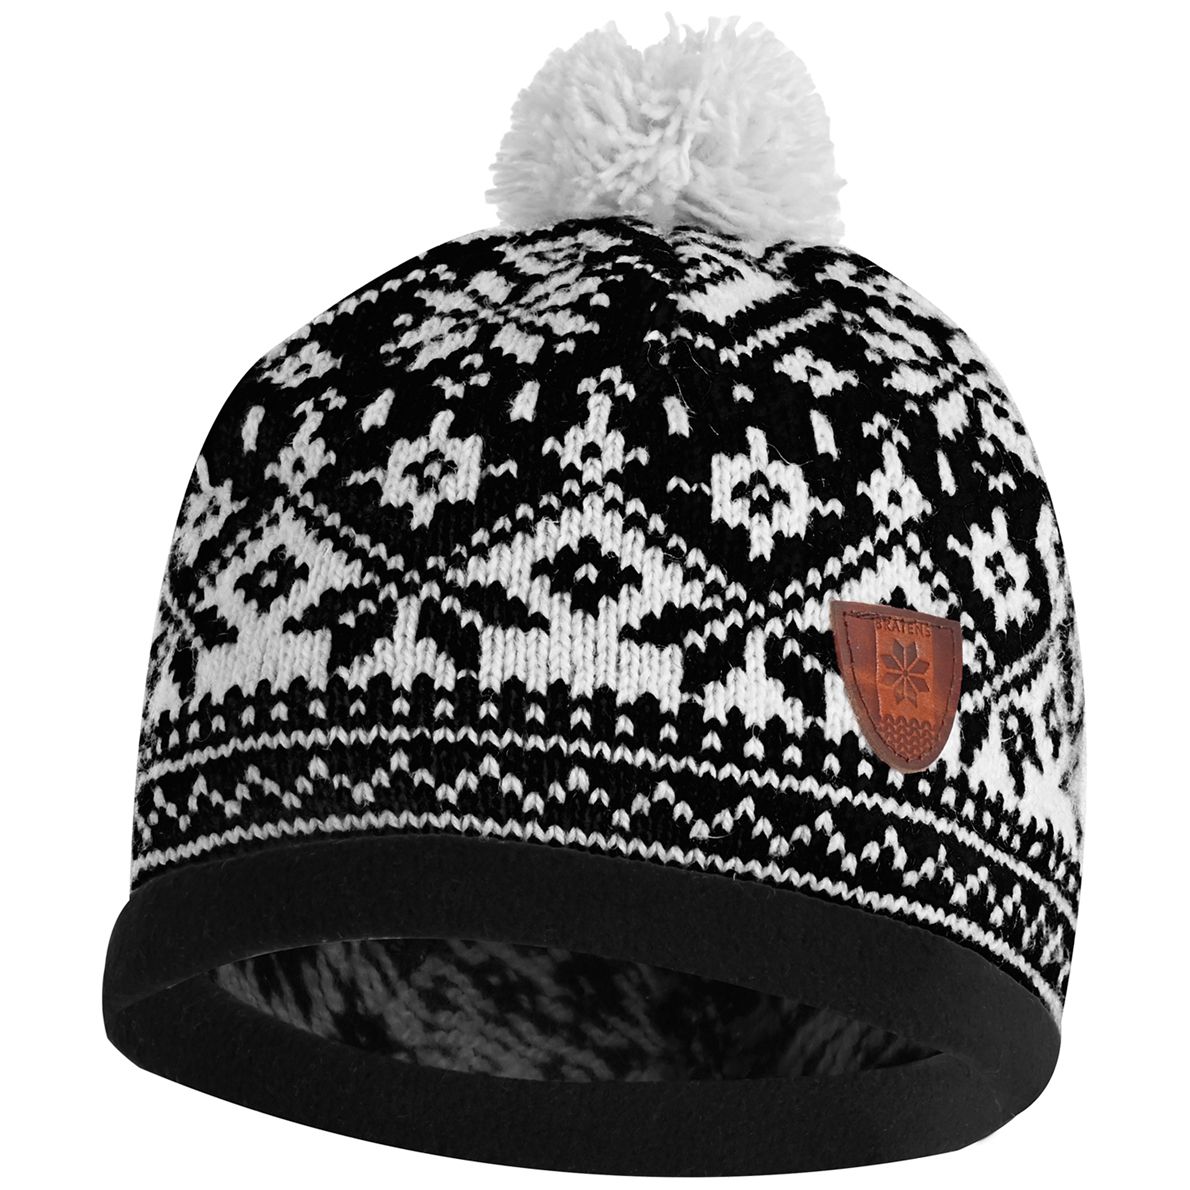 Hat Hallingdal - Black/white - One size